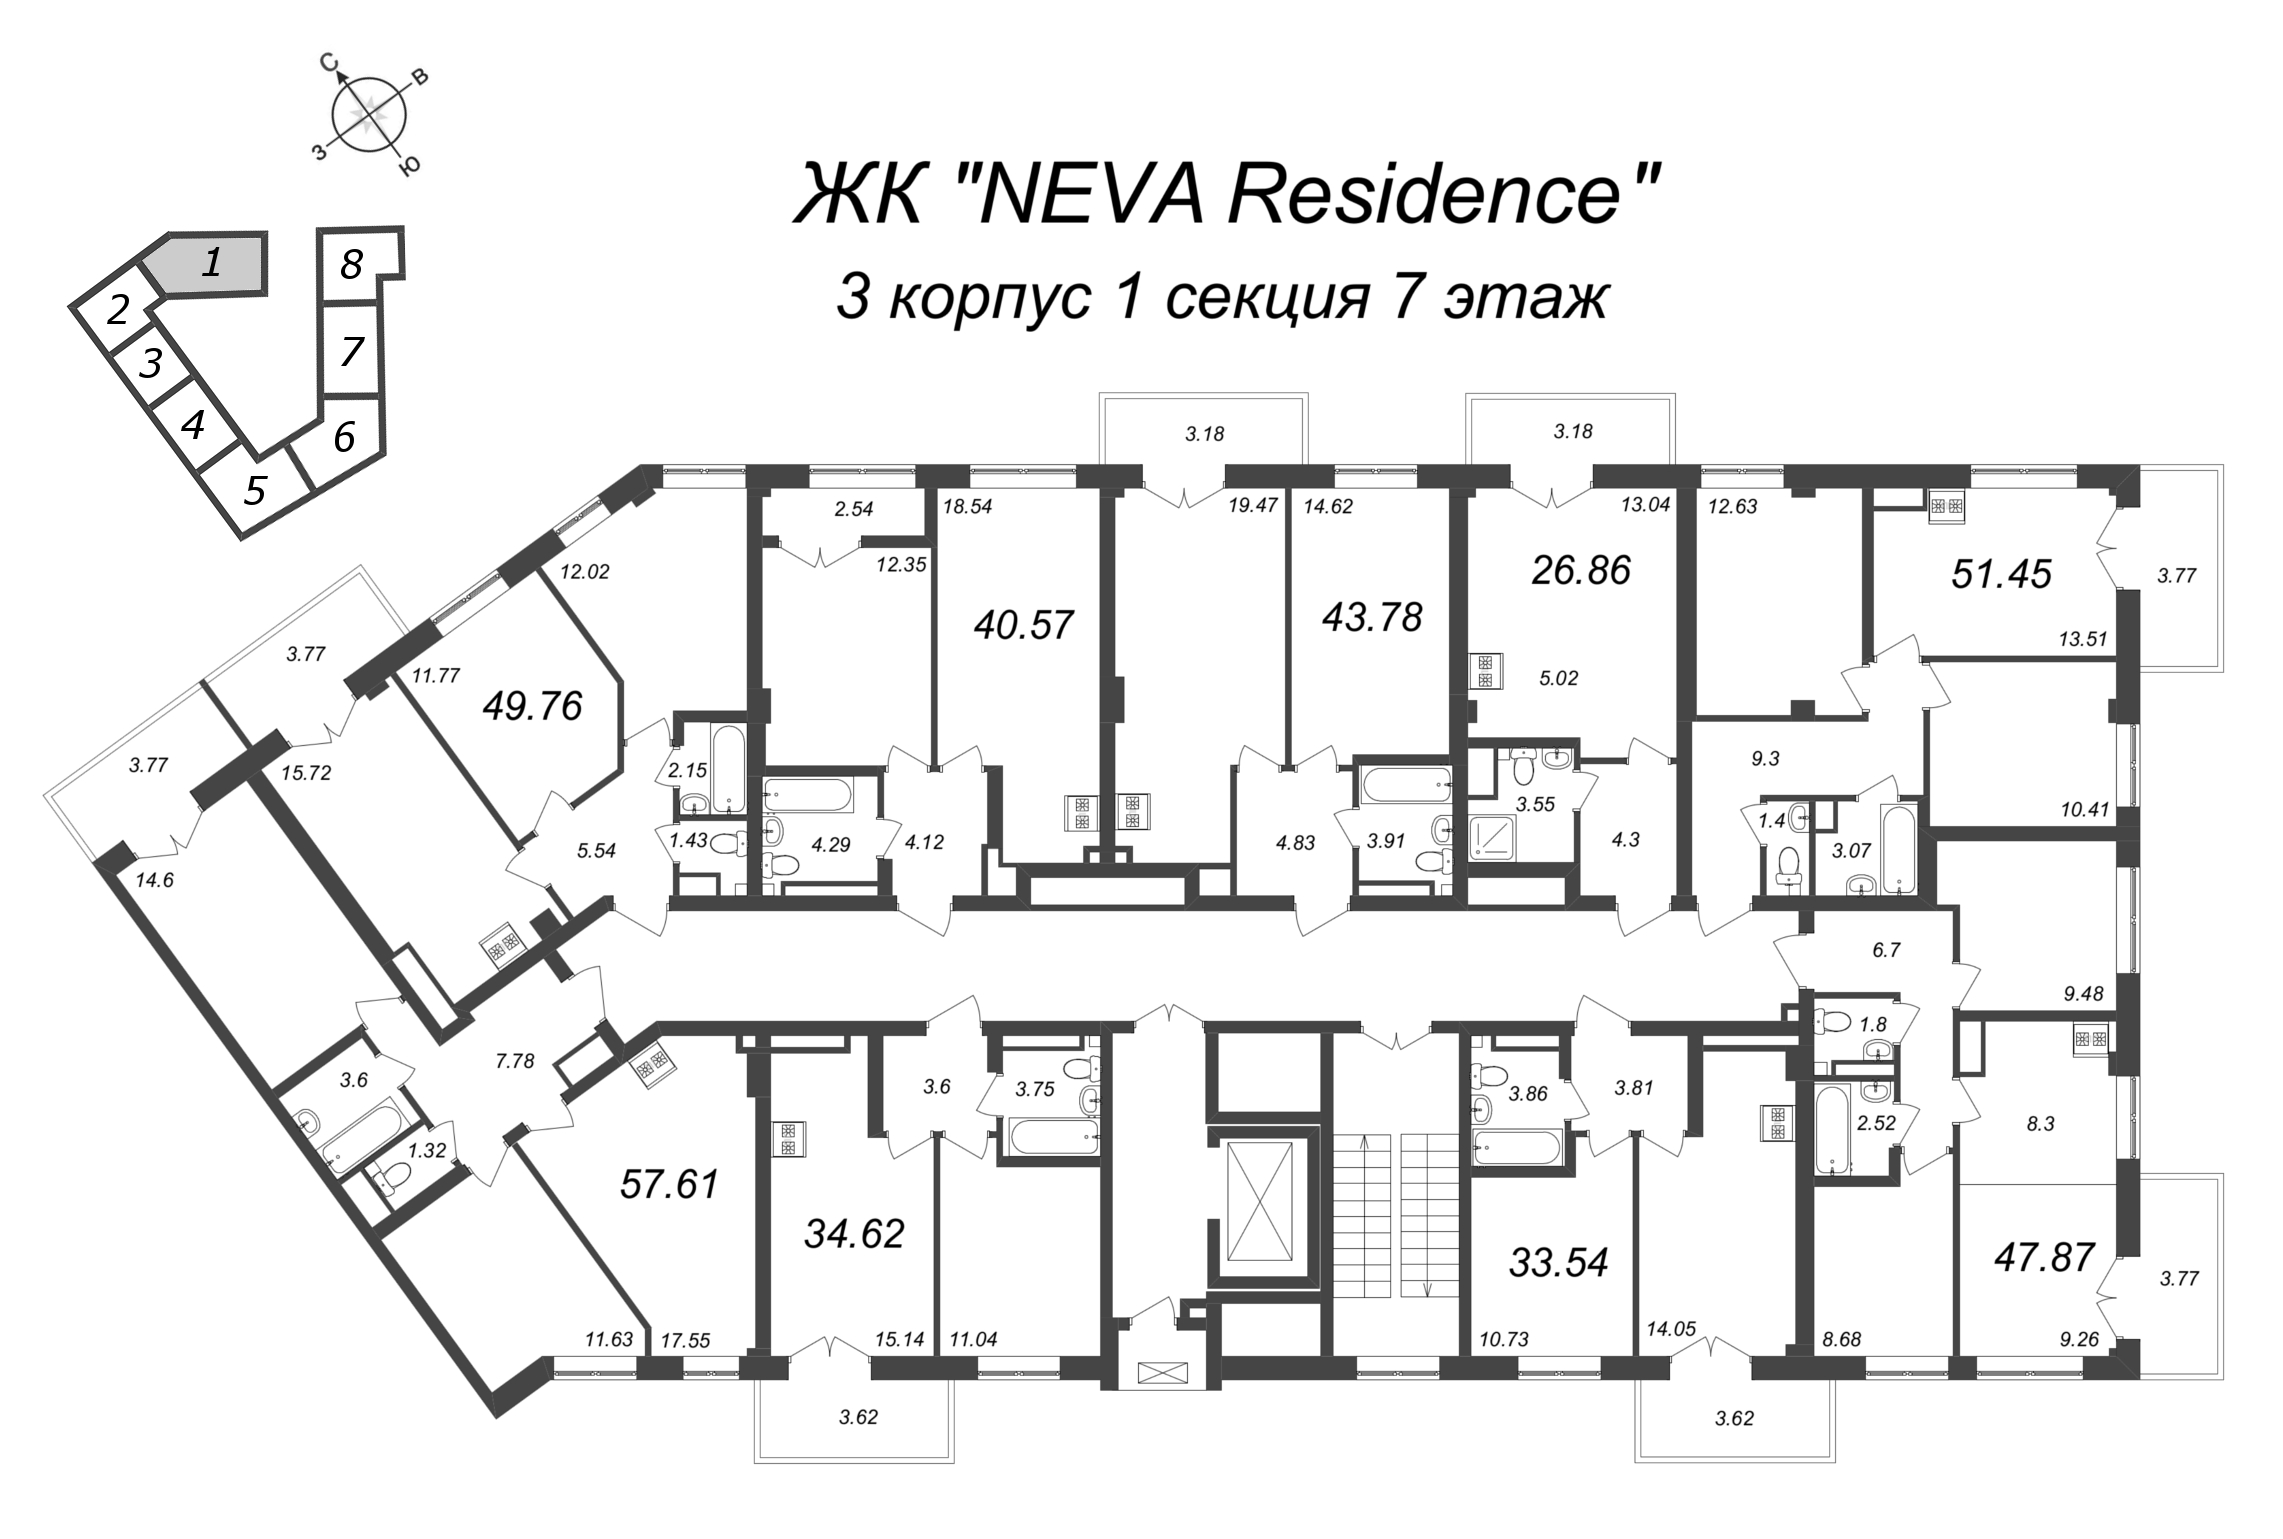 2-комнатная (Евро) квартира, 40.57 м² - планировка этажа